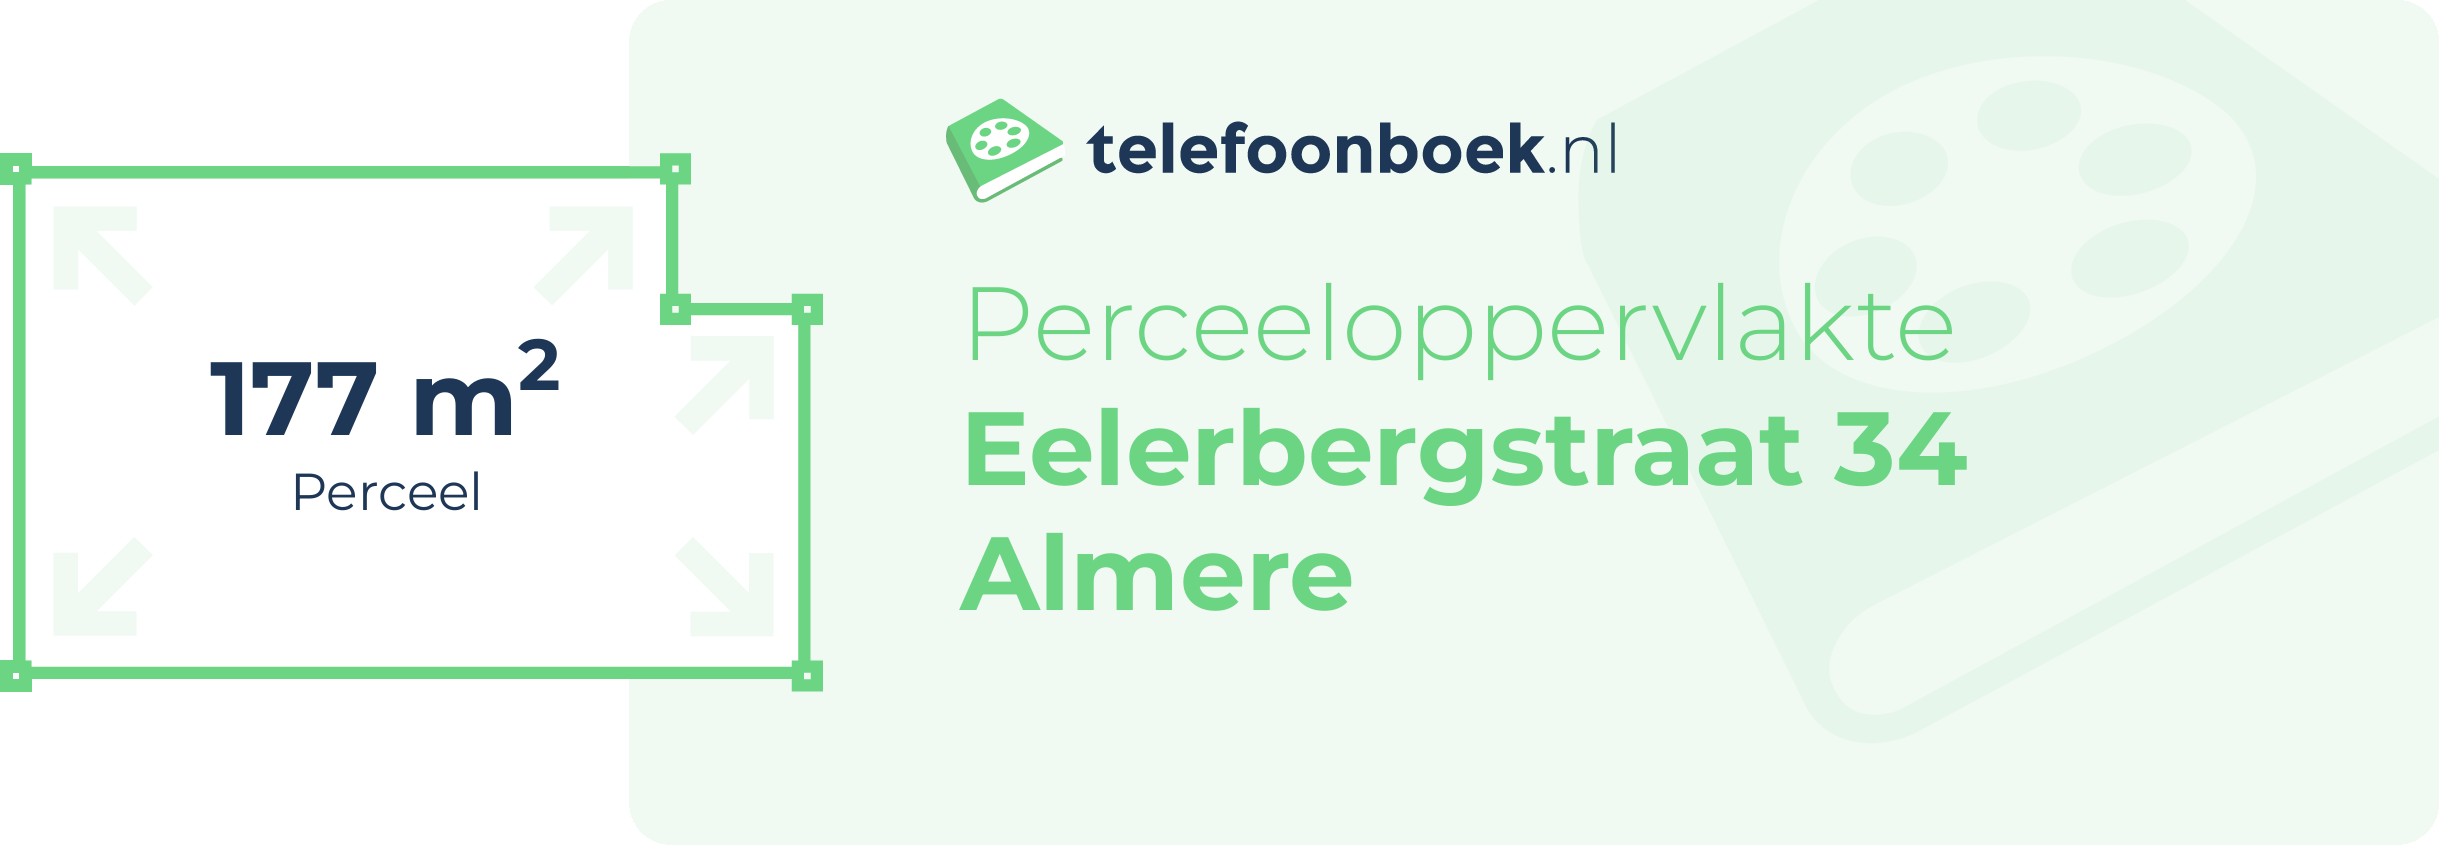 Perceeloppervlakte Eelerbergstraat 34 Almere